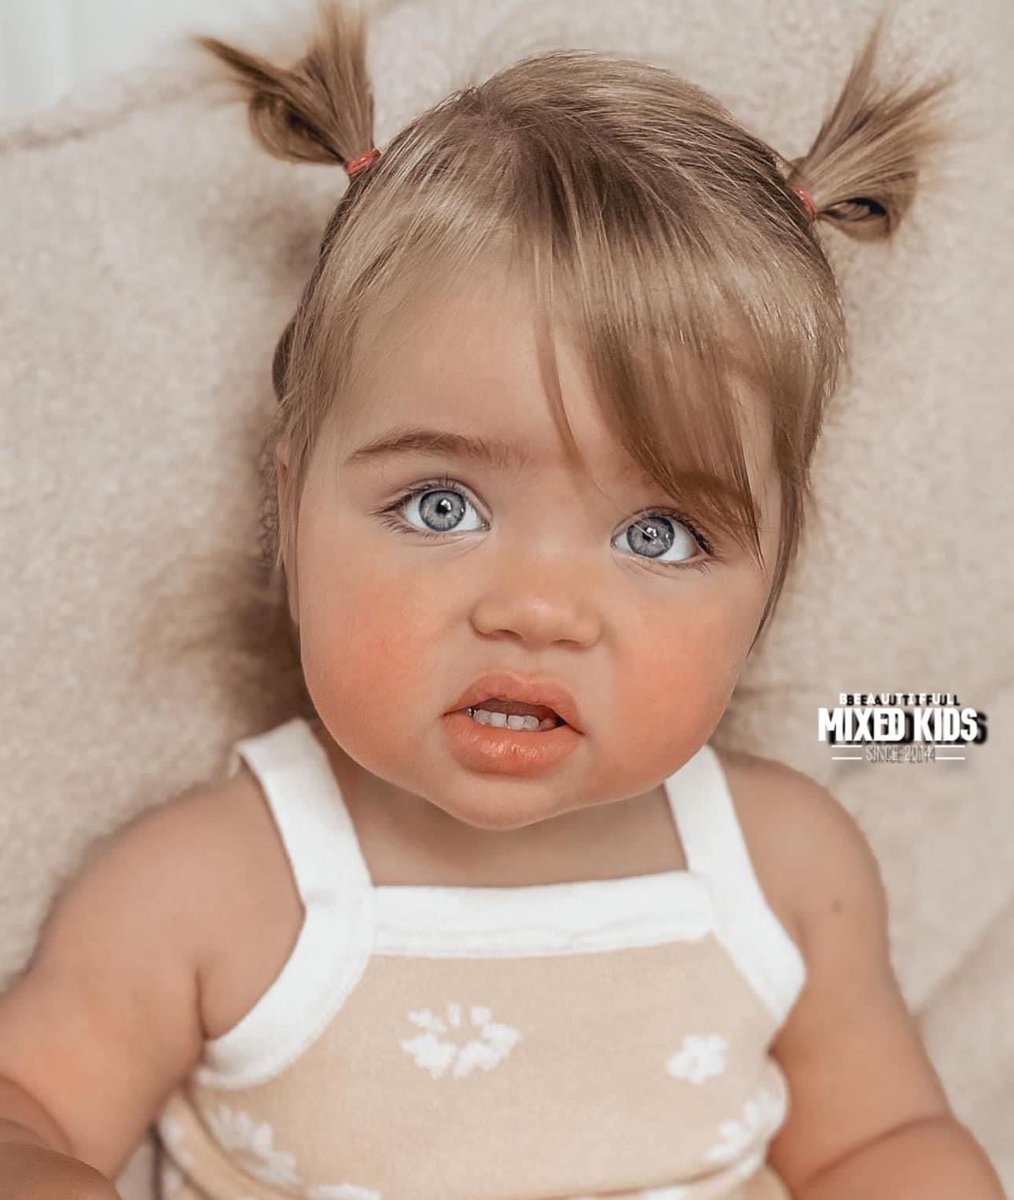 Gigi Isobèl - Filipino, Spanish, German, Irish, English & Australian ♥️

instagram.com/p/C6o8Ca6PXWG/…

#precious
#adorable
#cutekids
#infant 
#cutie
#mixed
#cutebaby
#mixedbaby 
#kids
#children
#mixedracebabies
#gorgeous
#baby
#babymodel
#mixedbabies
#mixedchildren
#love